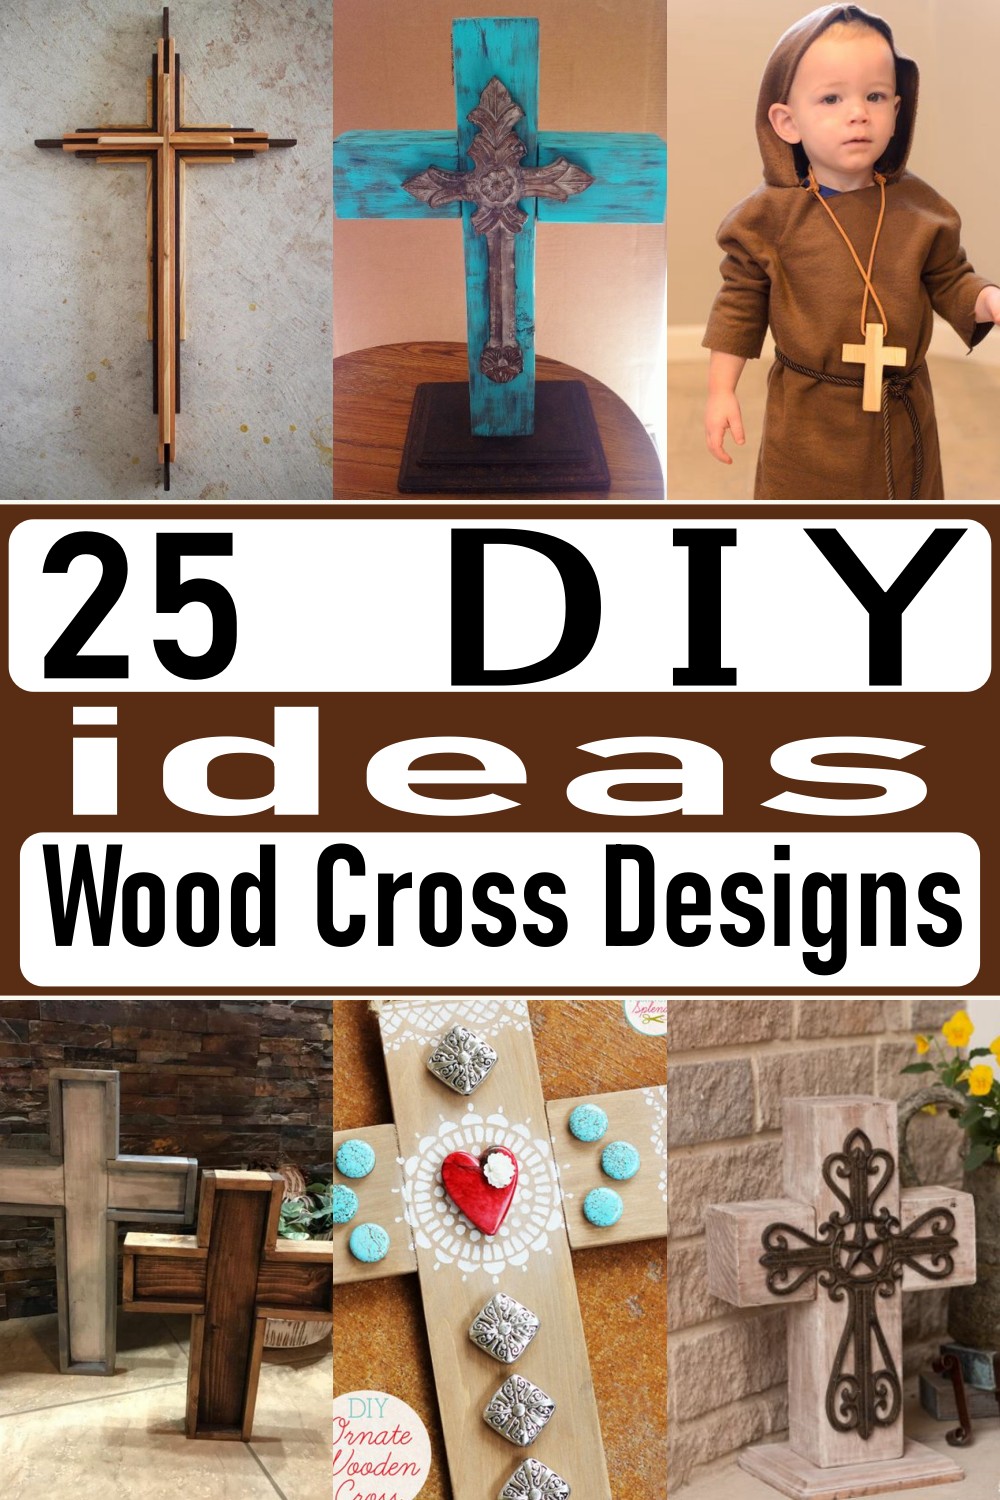 Wood Cross Designs